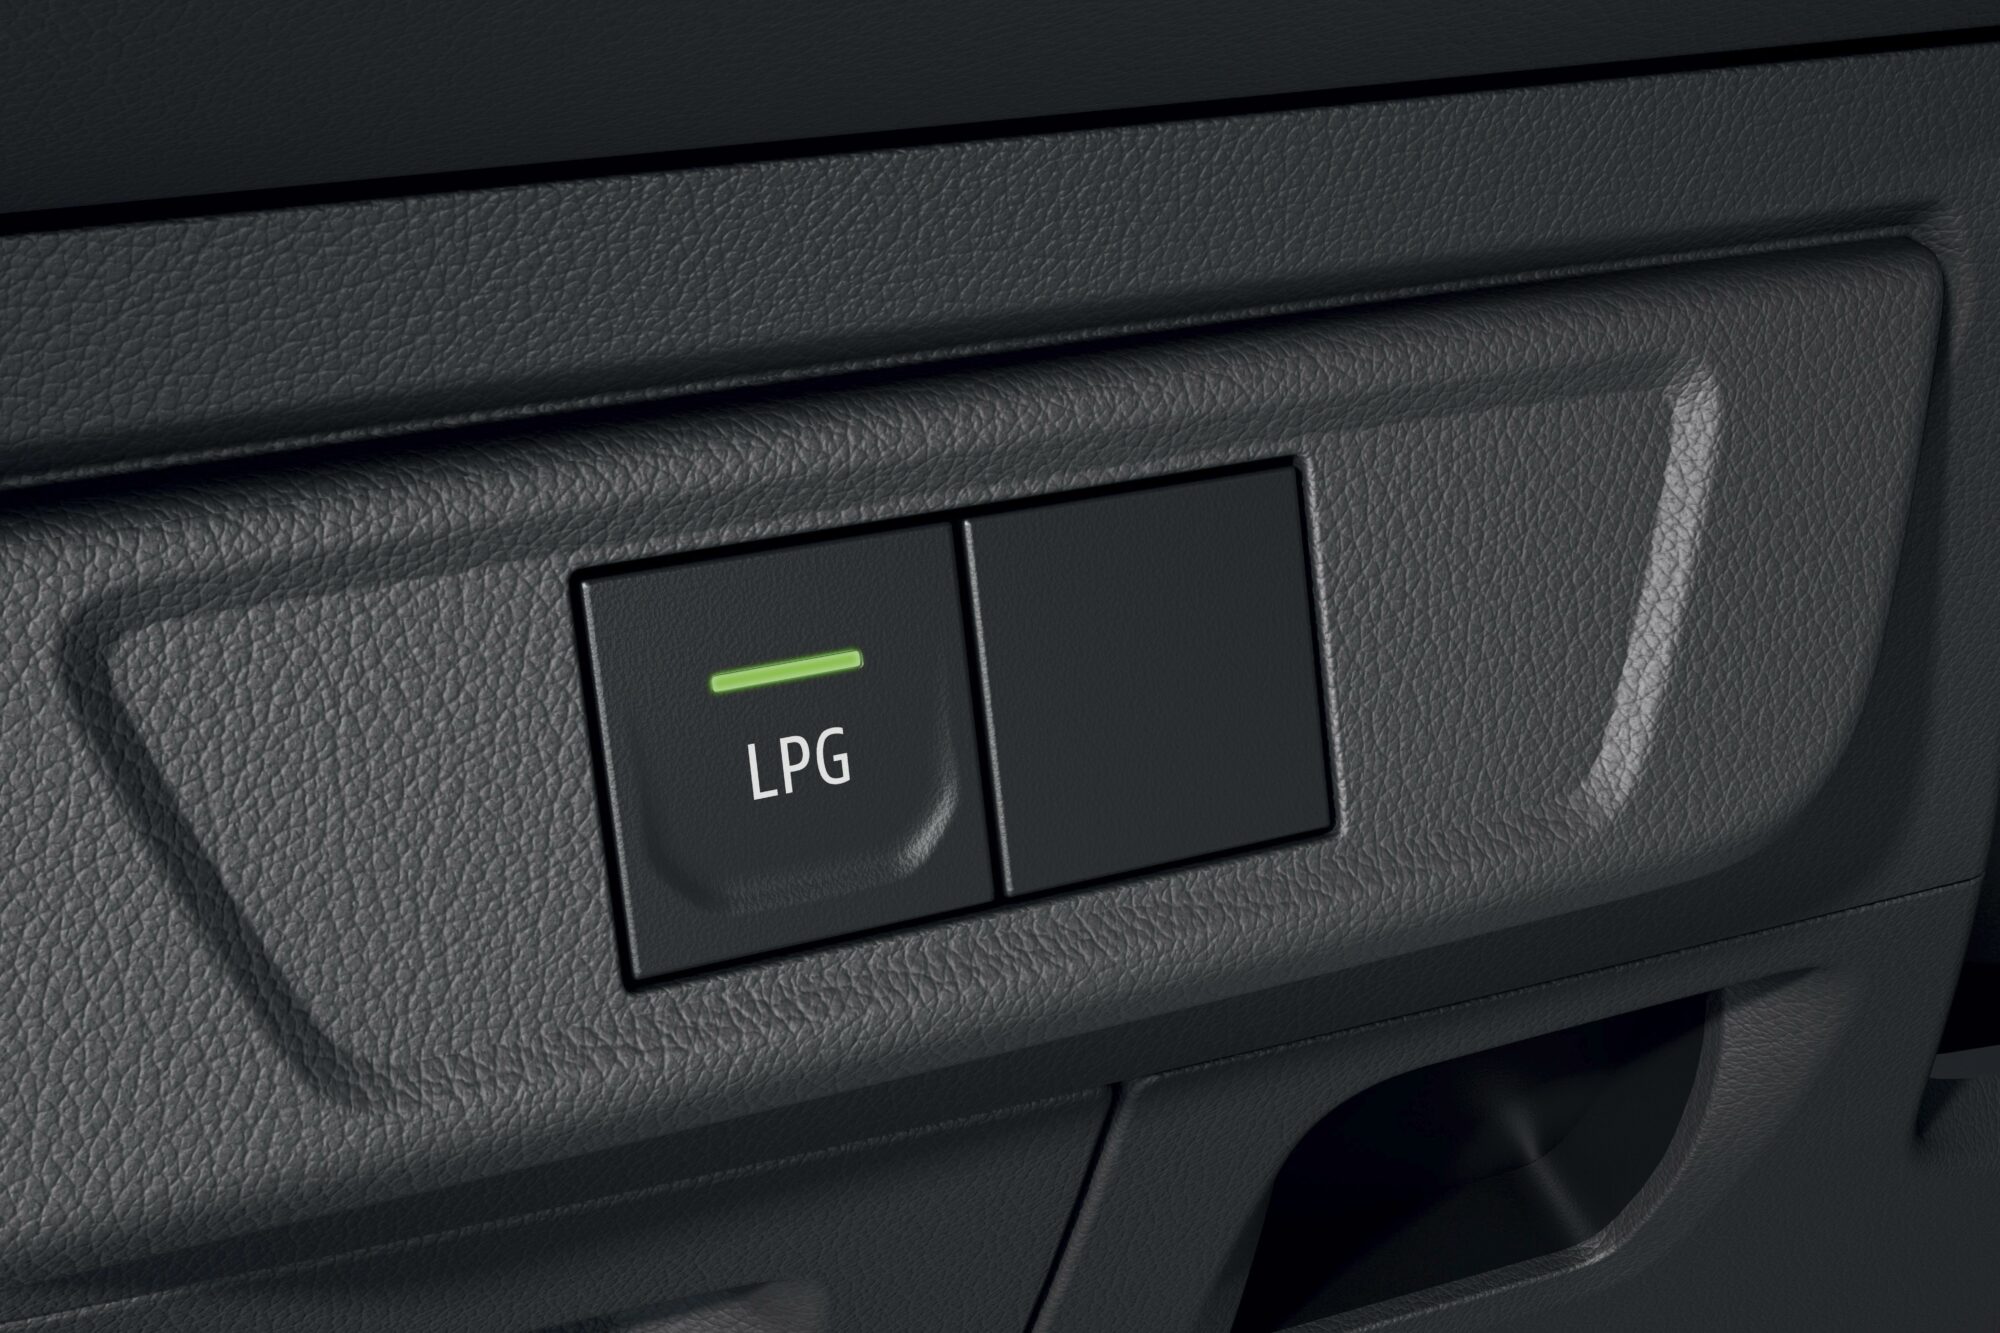 2021 - Story Dacia : Drive smart, drive LPG